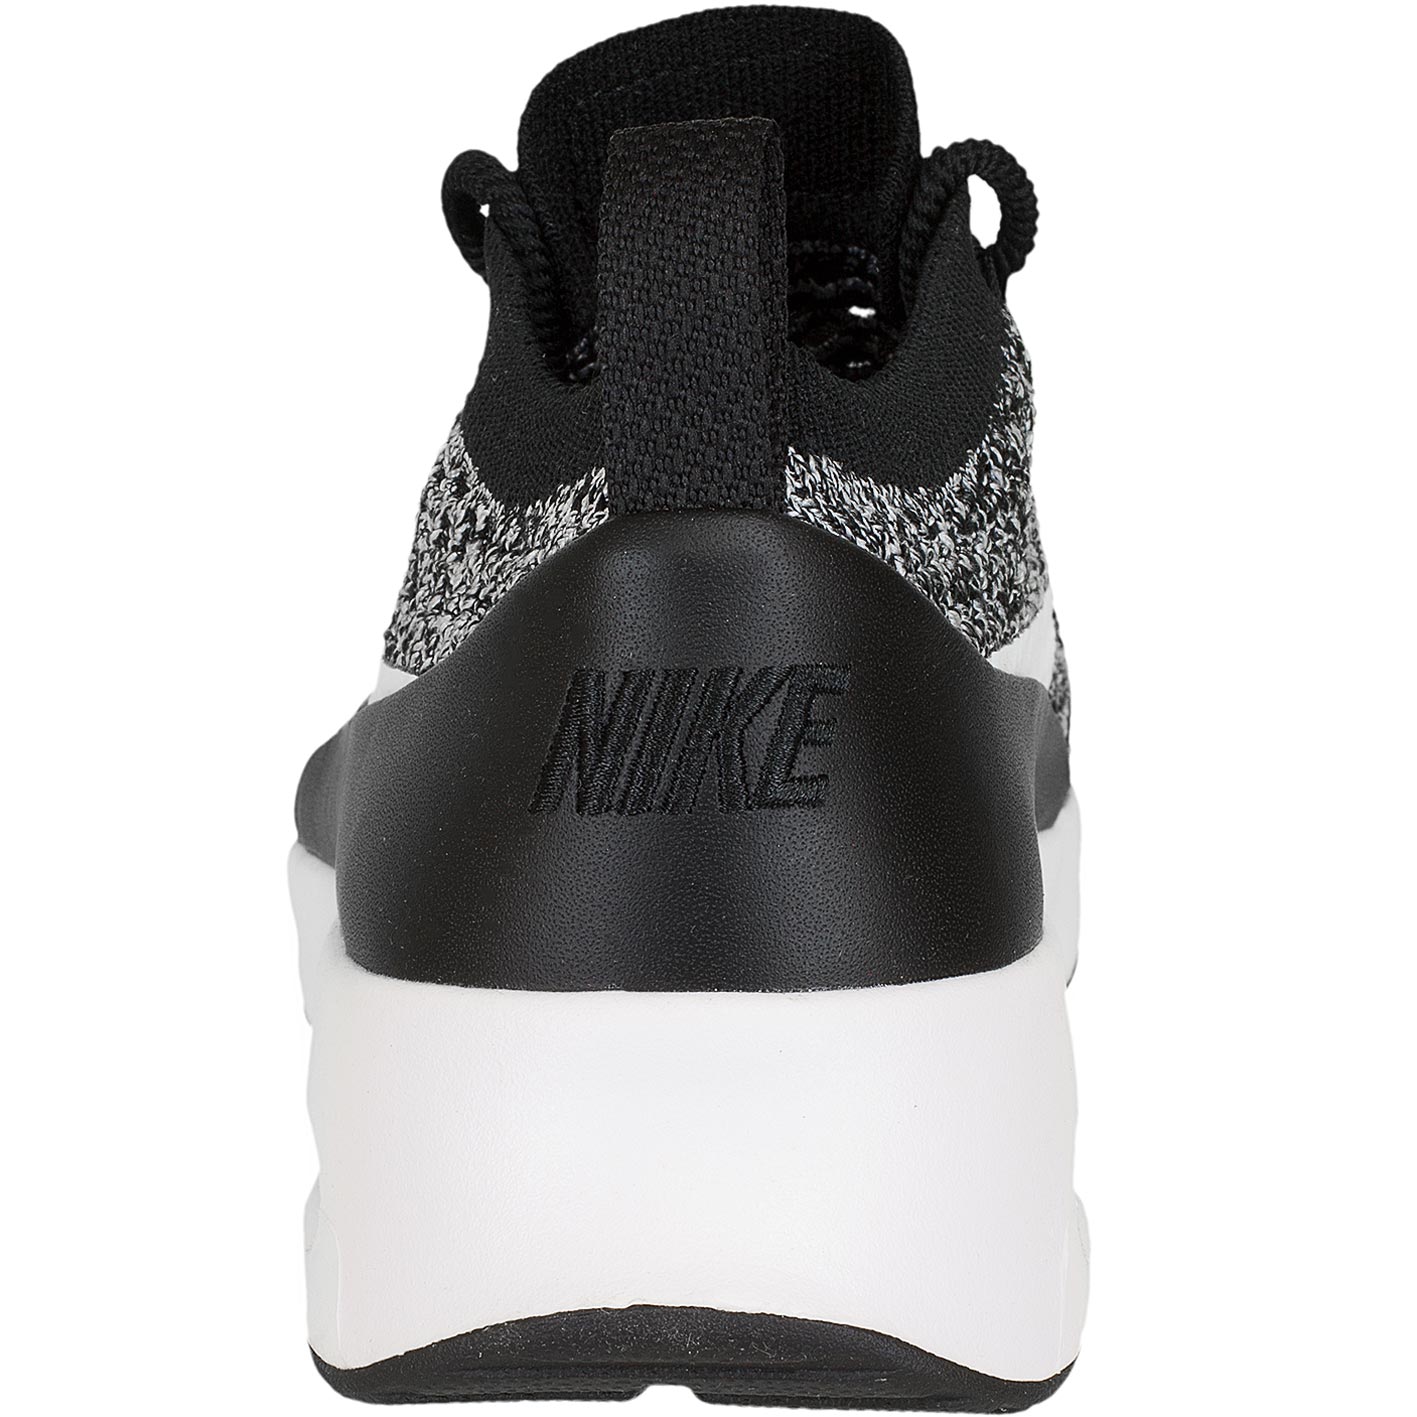 ☆ Nike Damen Sneaker Air Max Thea Ultra Flyknit schwarz/weiß - hier  bestellen!